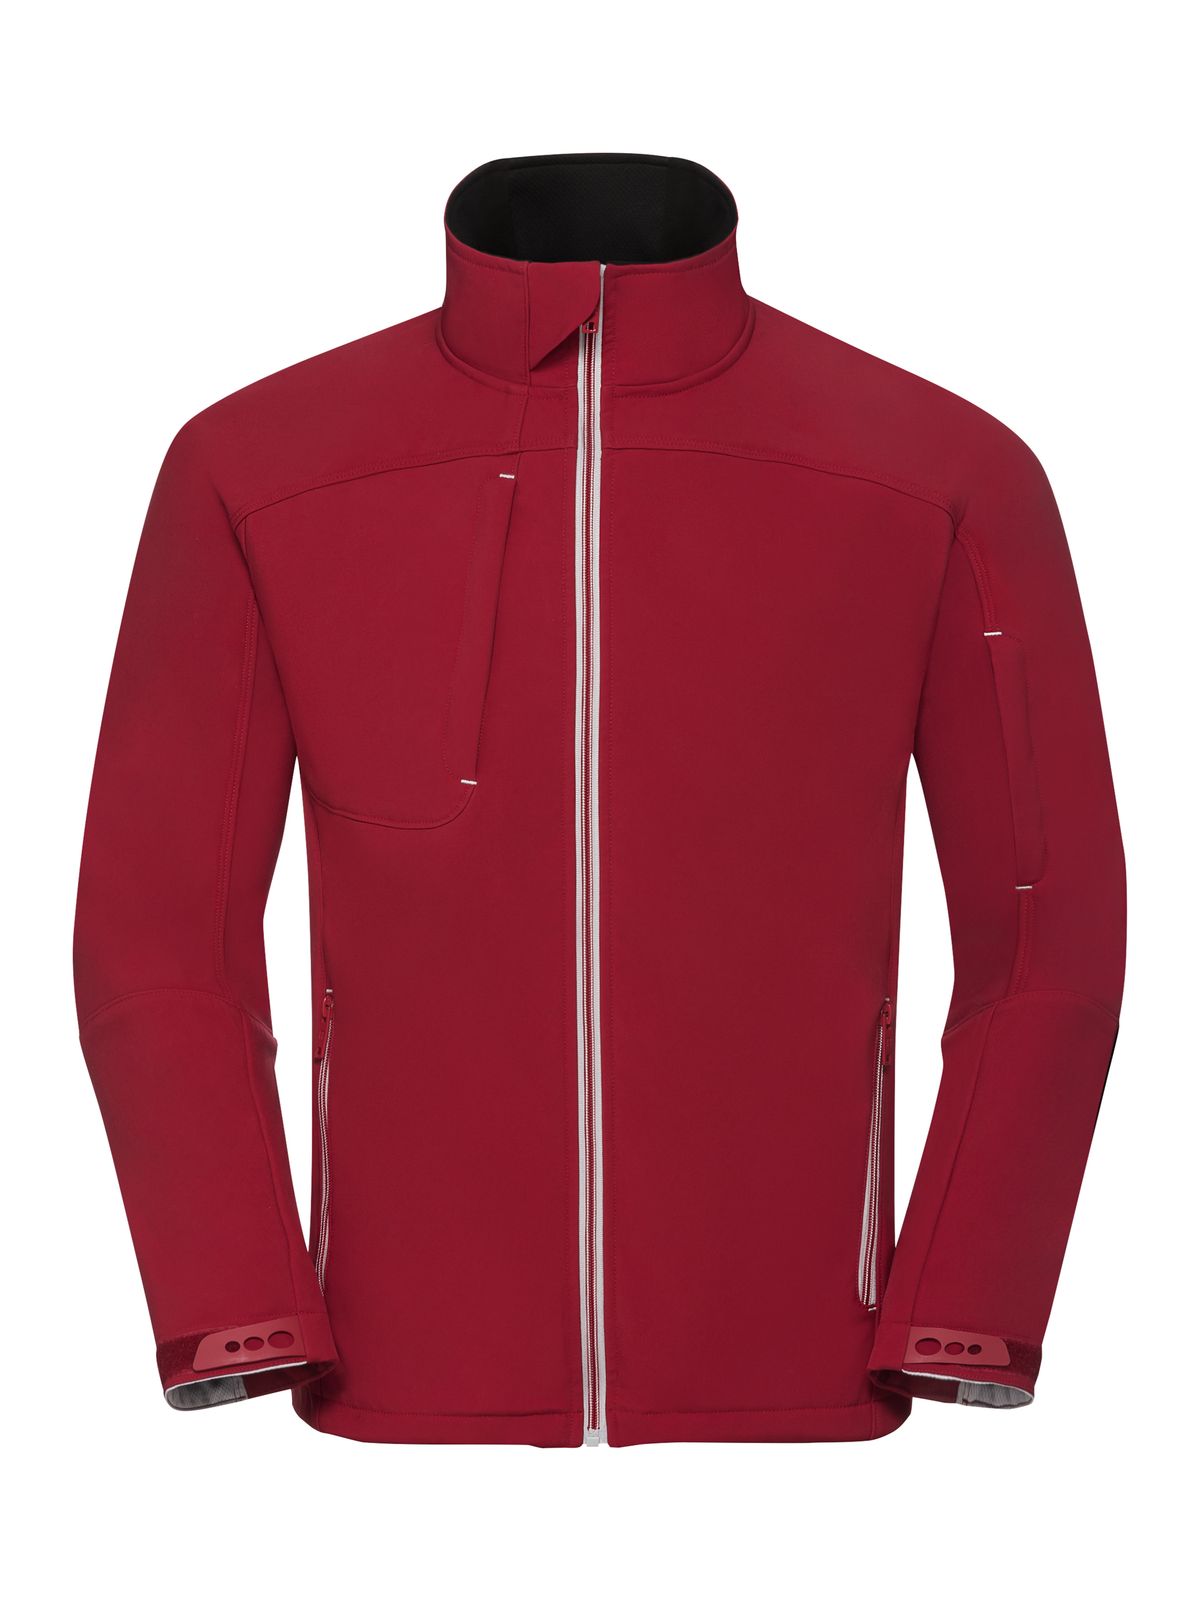 mens-bionic-softshell-jacket-classic-red.webp